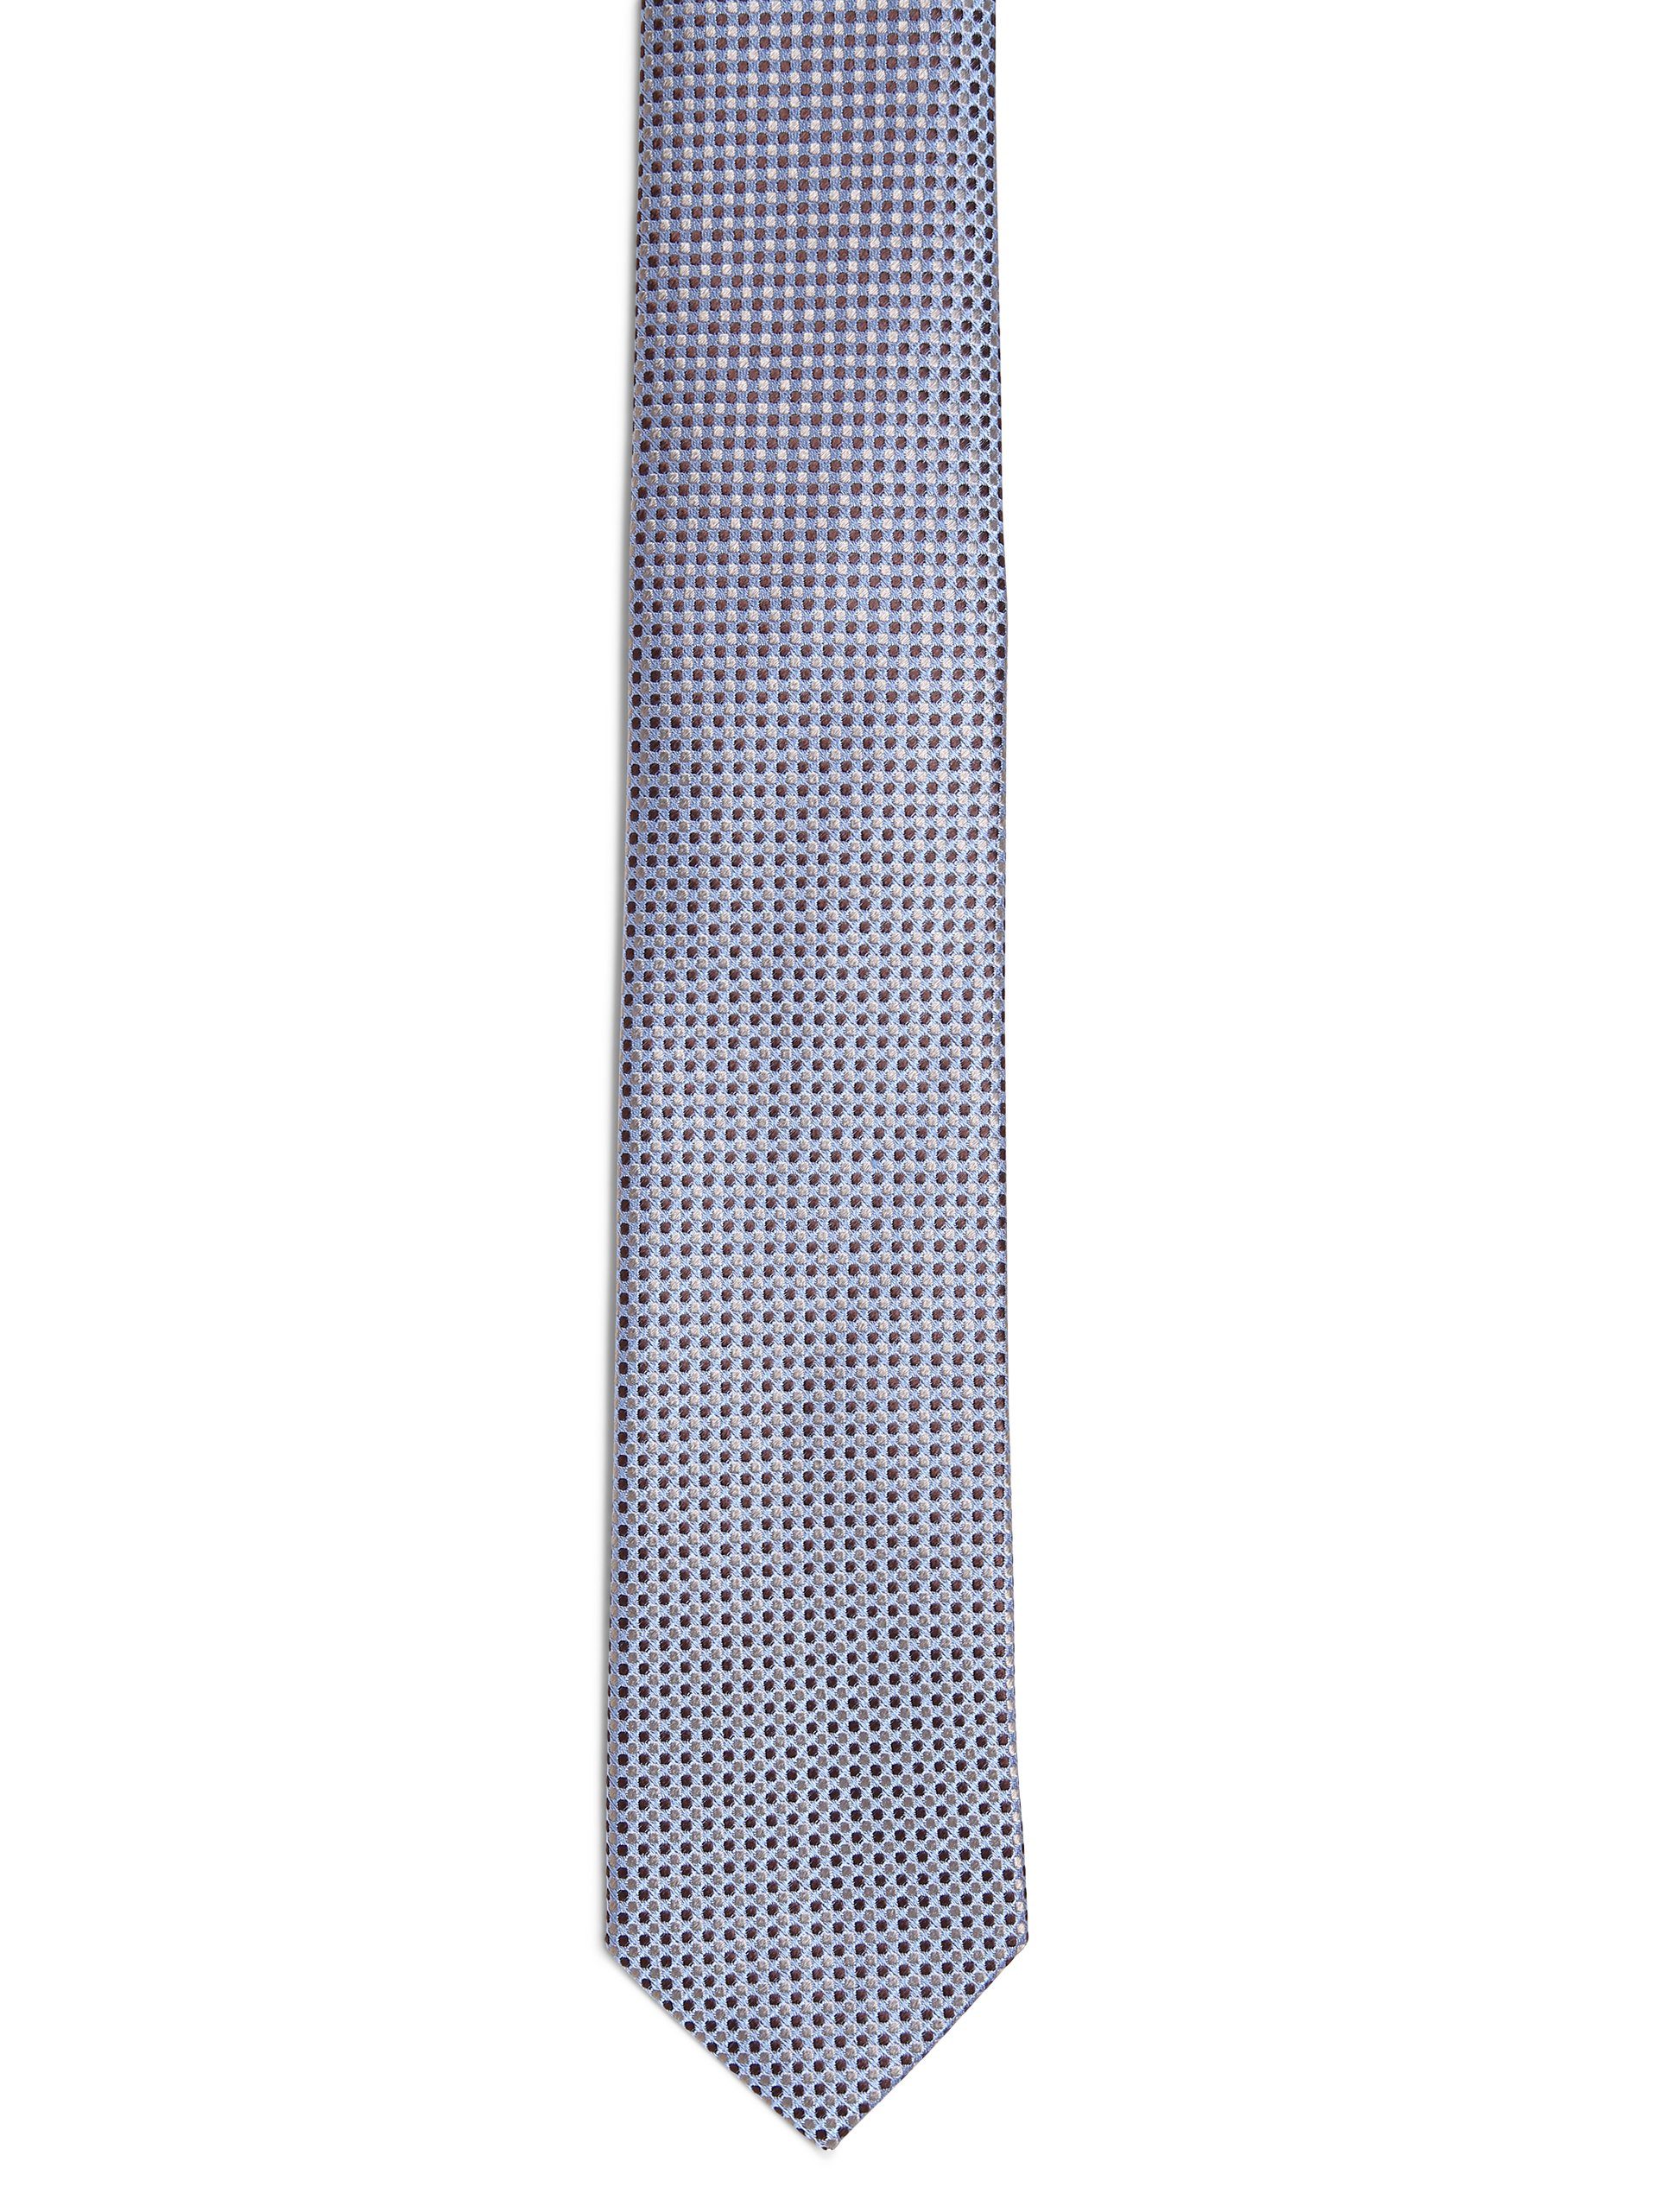 James Andrew taupe blau Krawatte